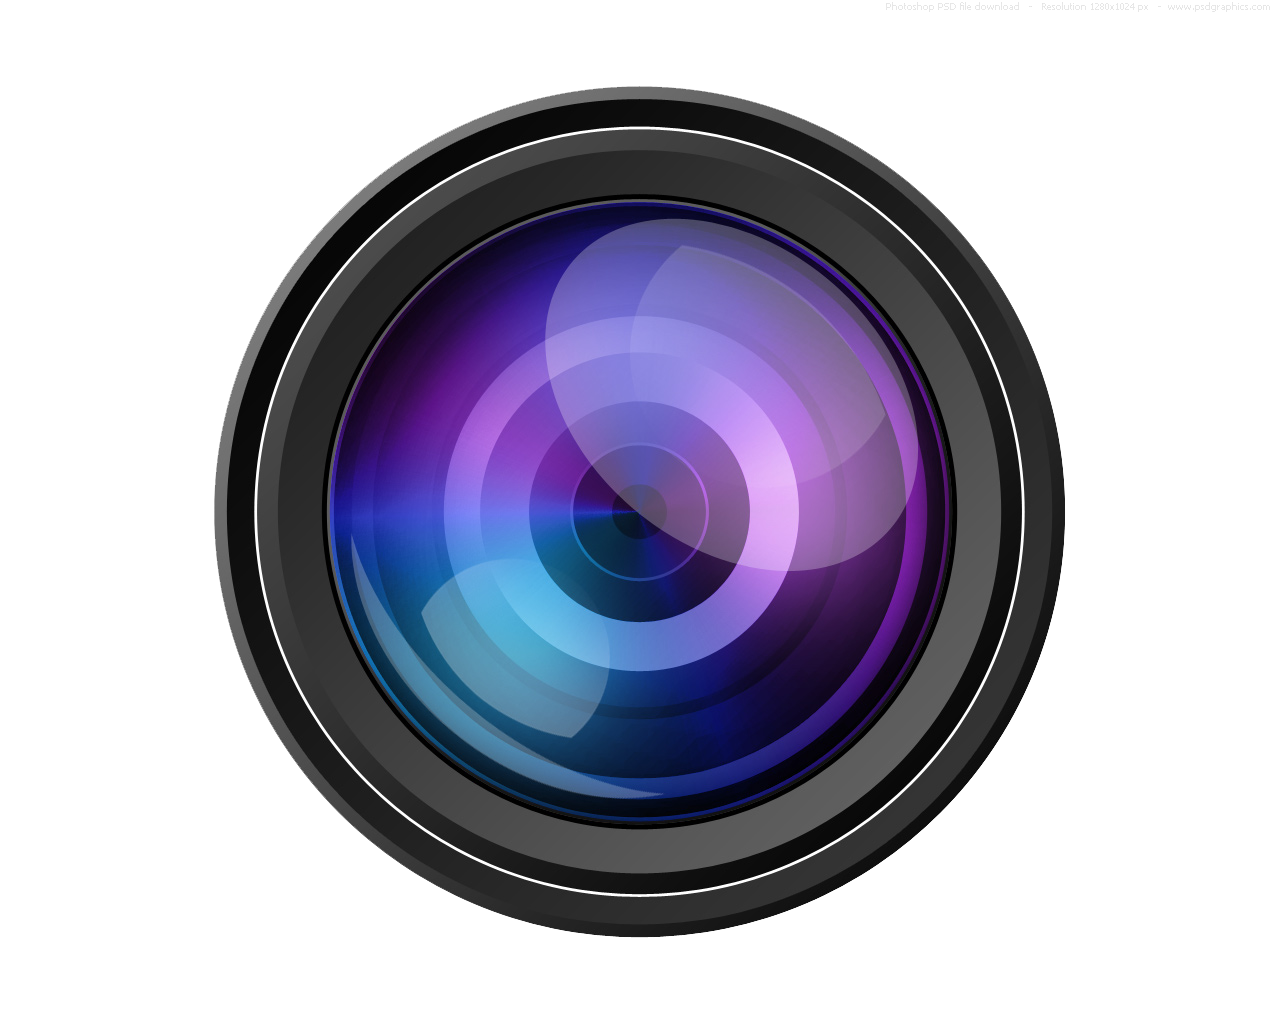 Video Camera Lens PNG Transparent Image SVG Clip arts